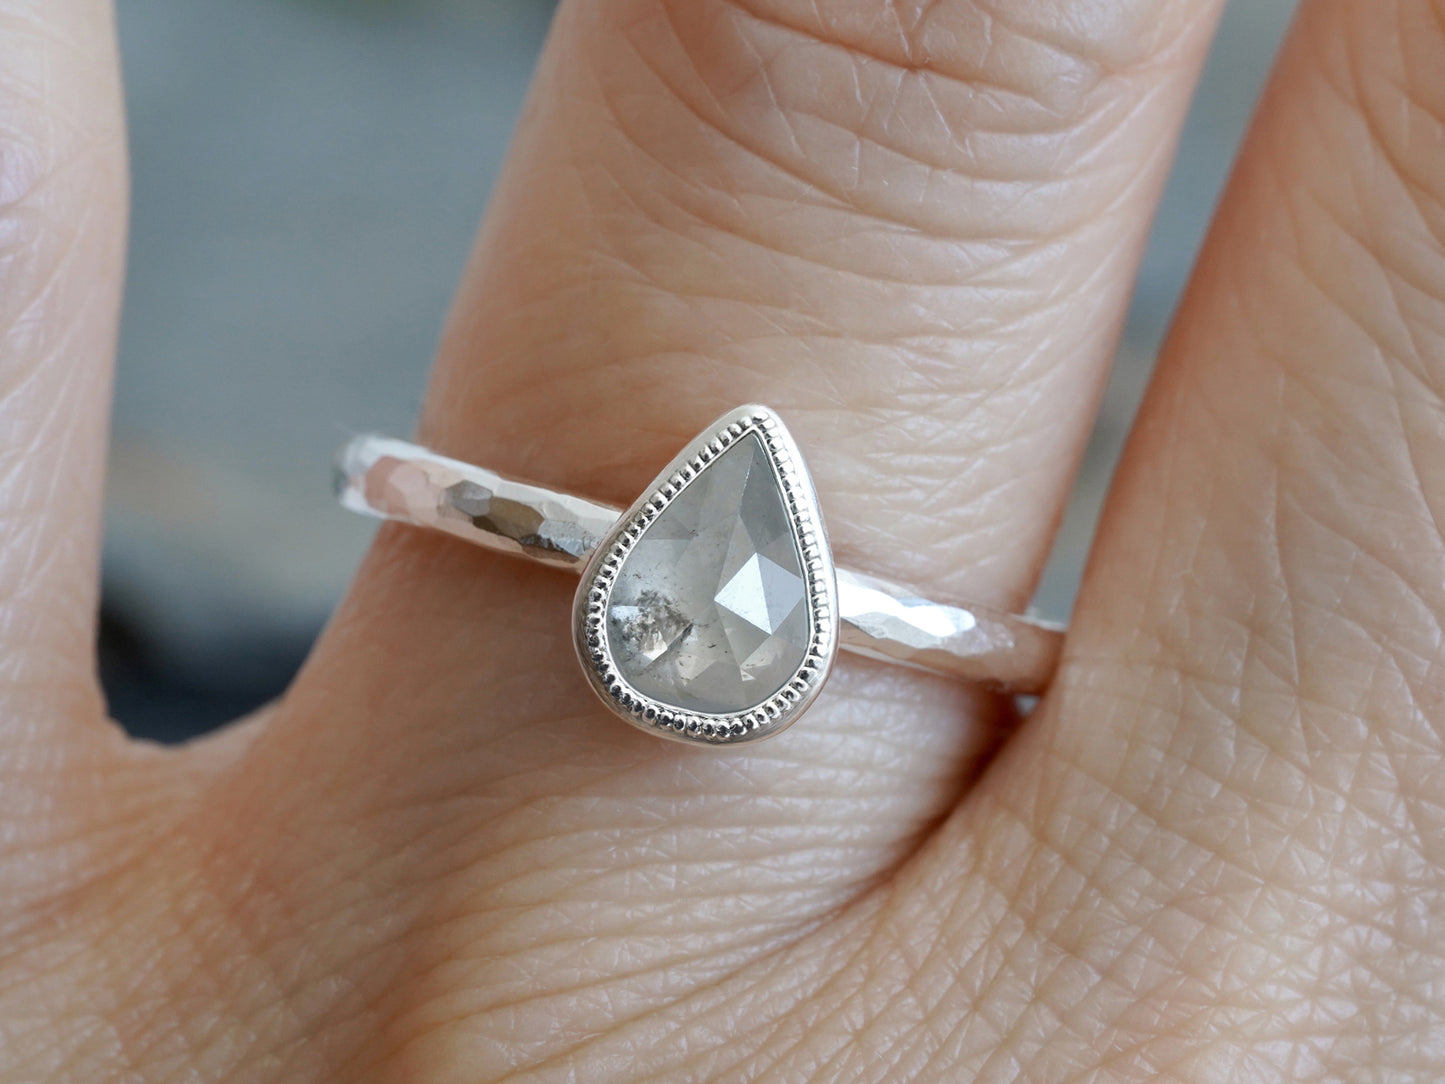 0.80ct Light Grey Diamond Ring, Rose Cut Diamond Engagement Ring, Small Diamond Ring